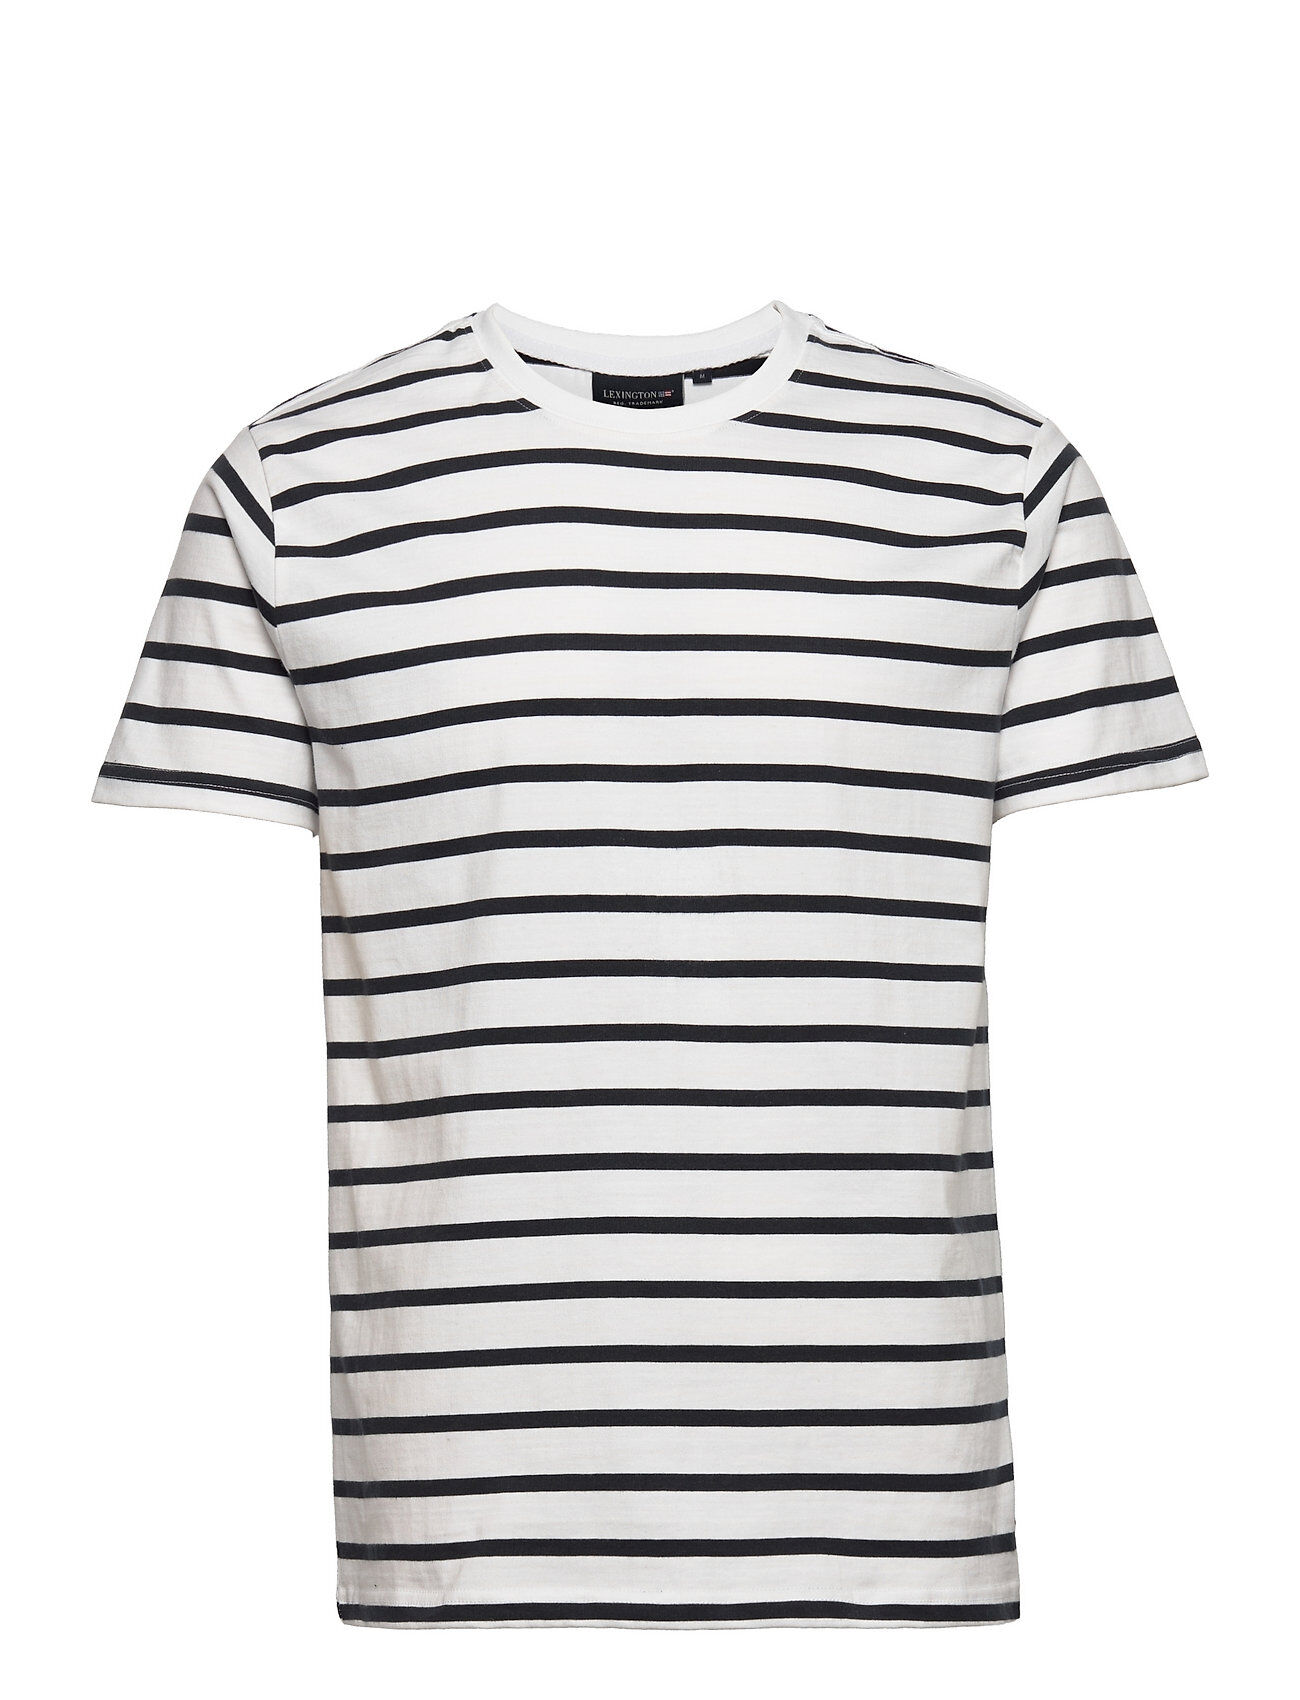 Lexington Clothing Ricky Striped Tee T-shirts Short-sleeved Multi/mønstret Lexington Clothing